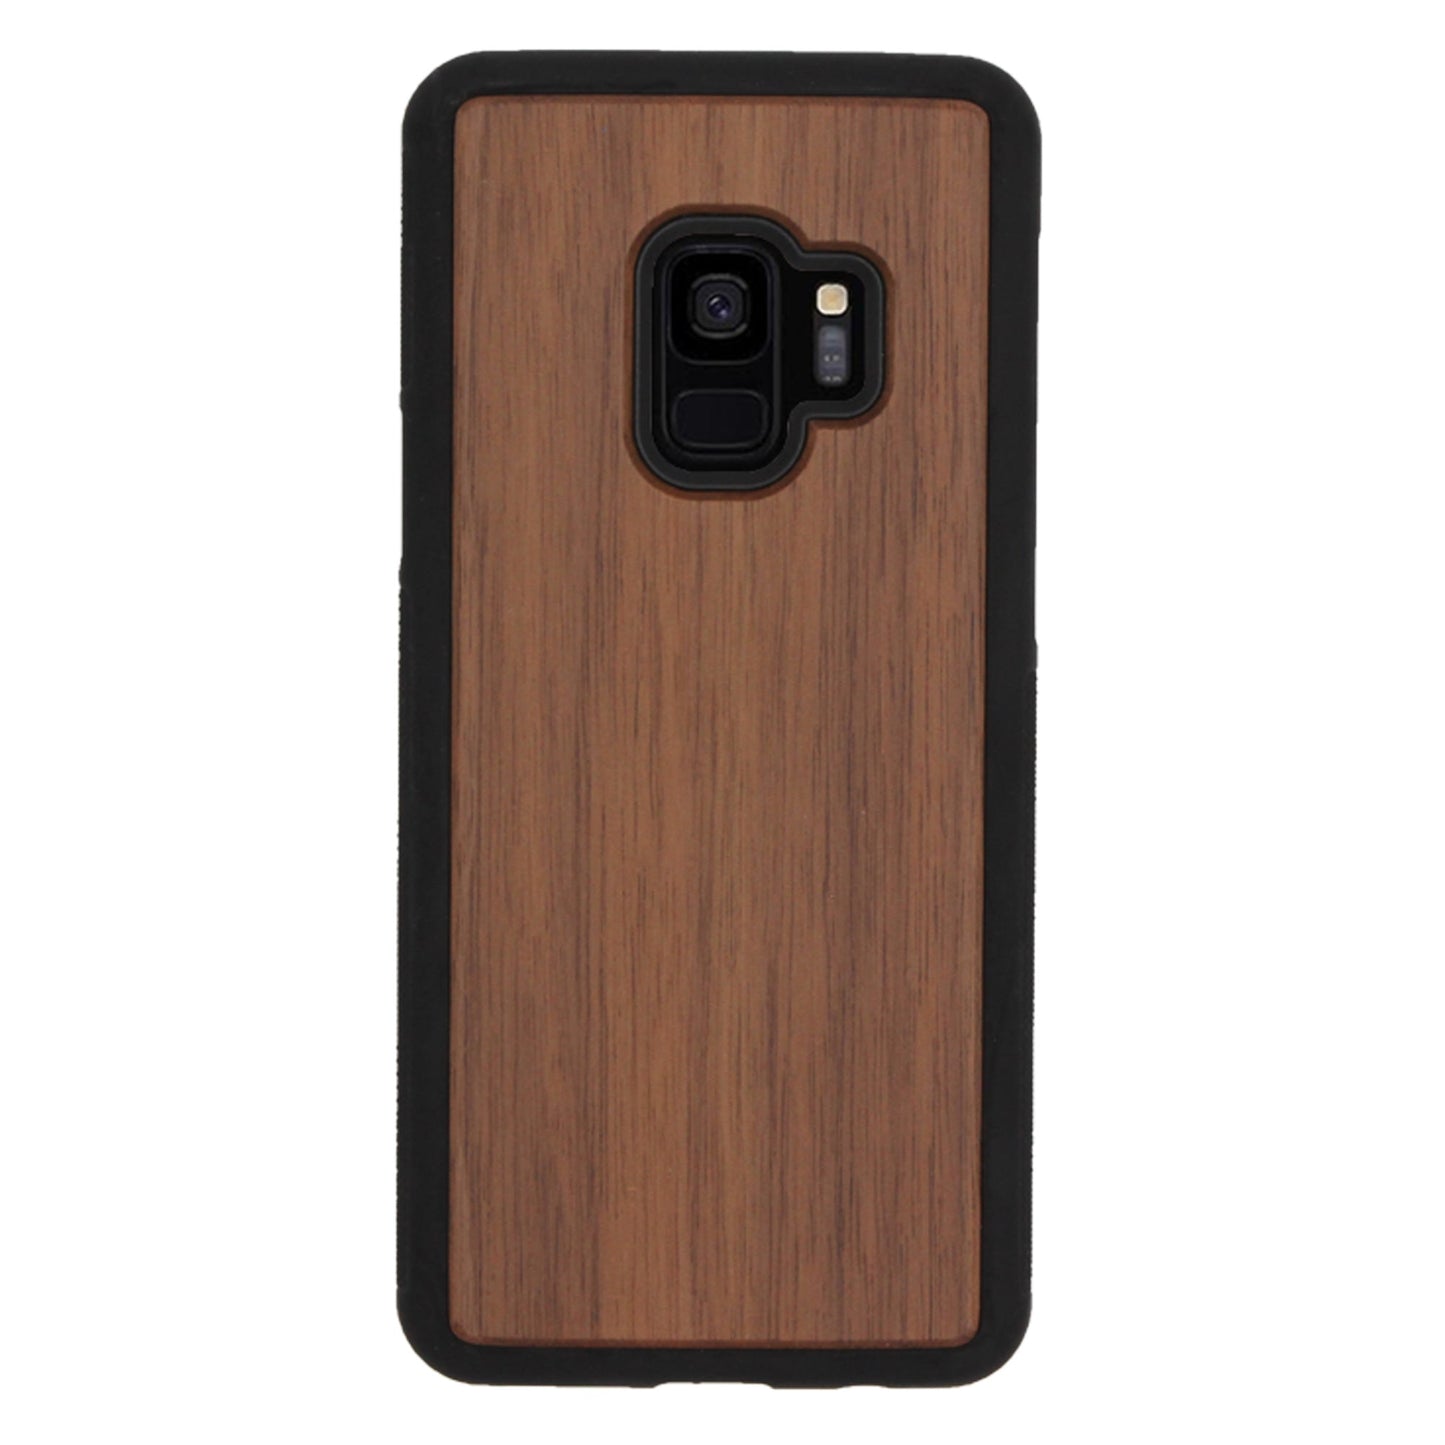 Eden case made of walnut wood for Samsung Galaxy S9